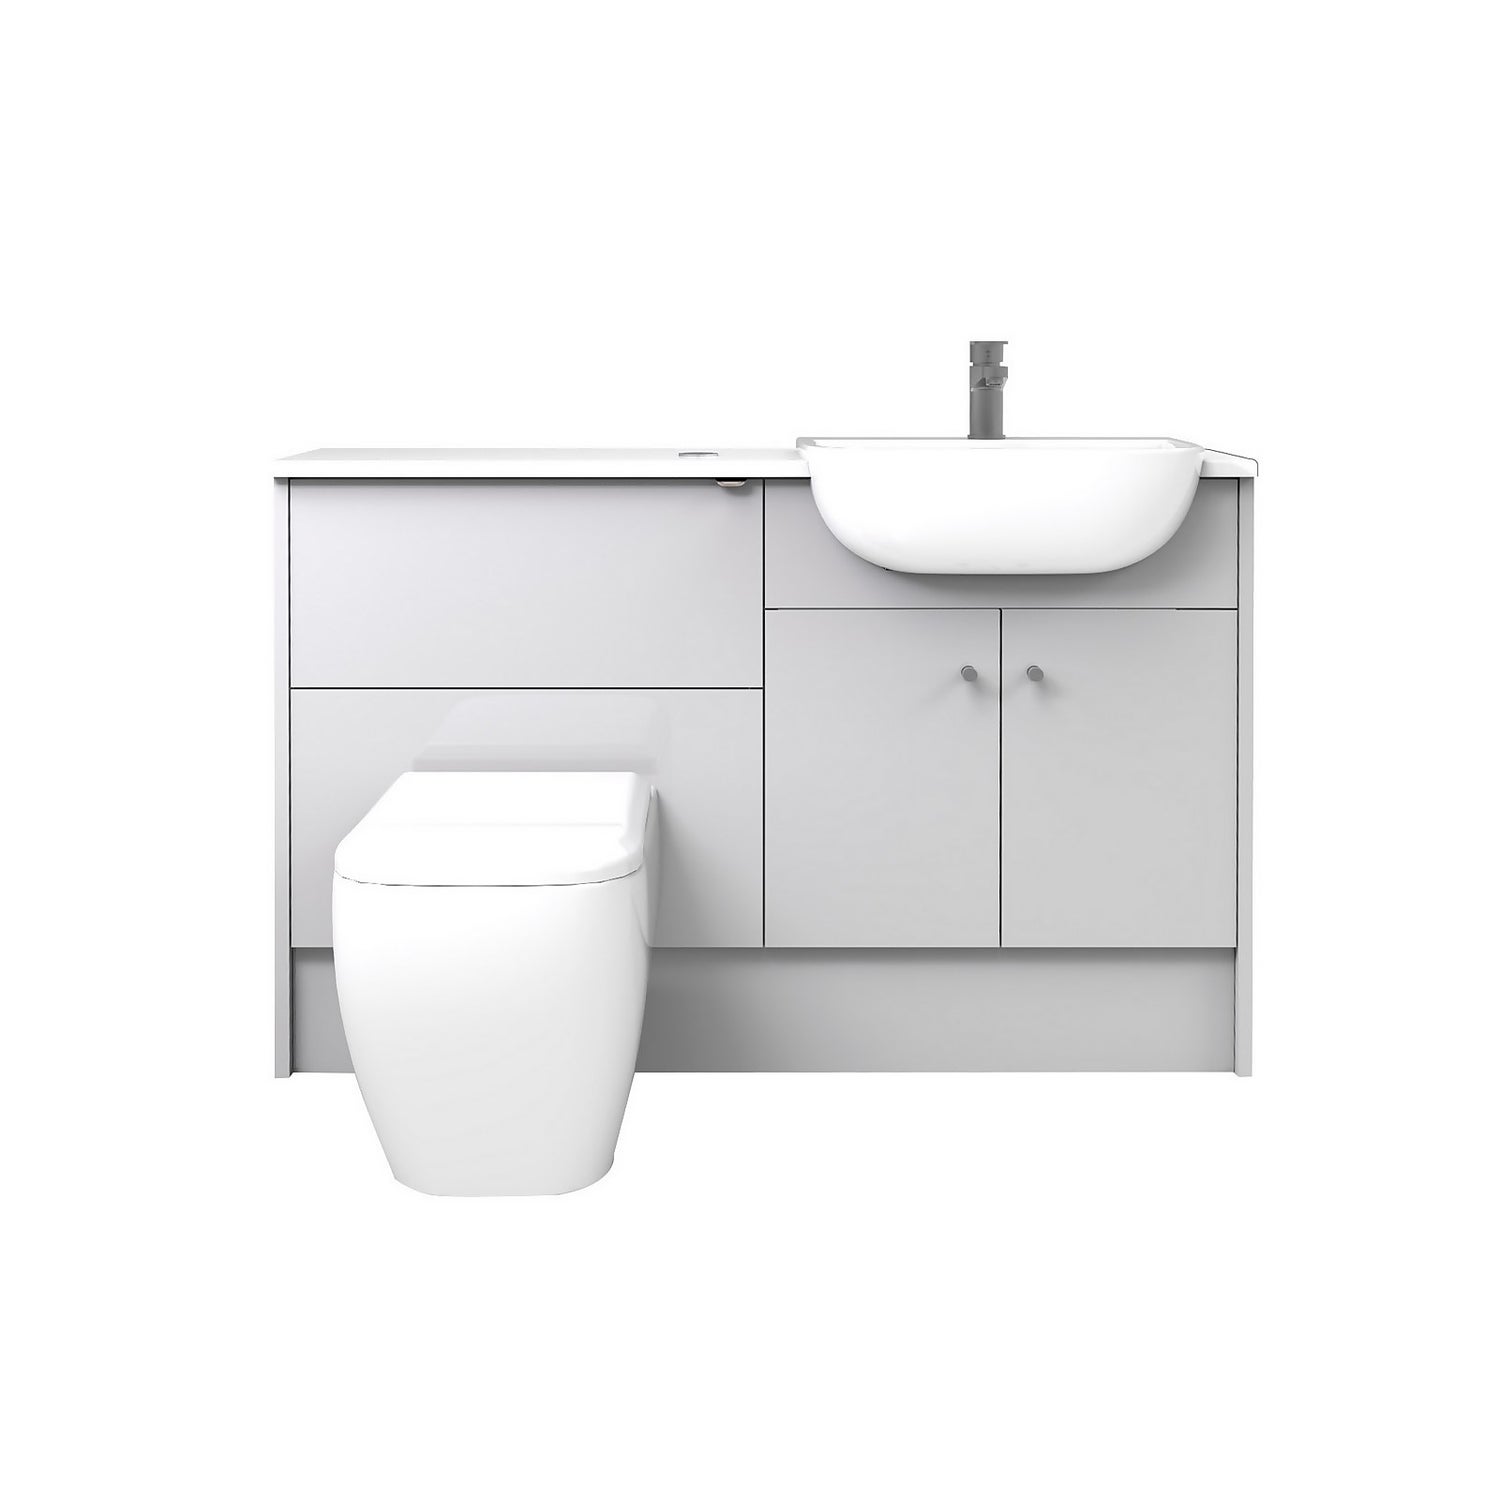 Portfolio Fitted Bathroom Furniture (W)1240mm x (D)320mm  - Gloss Light Grey